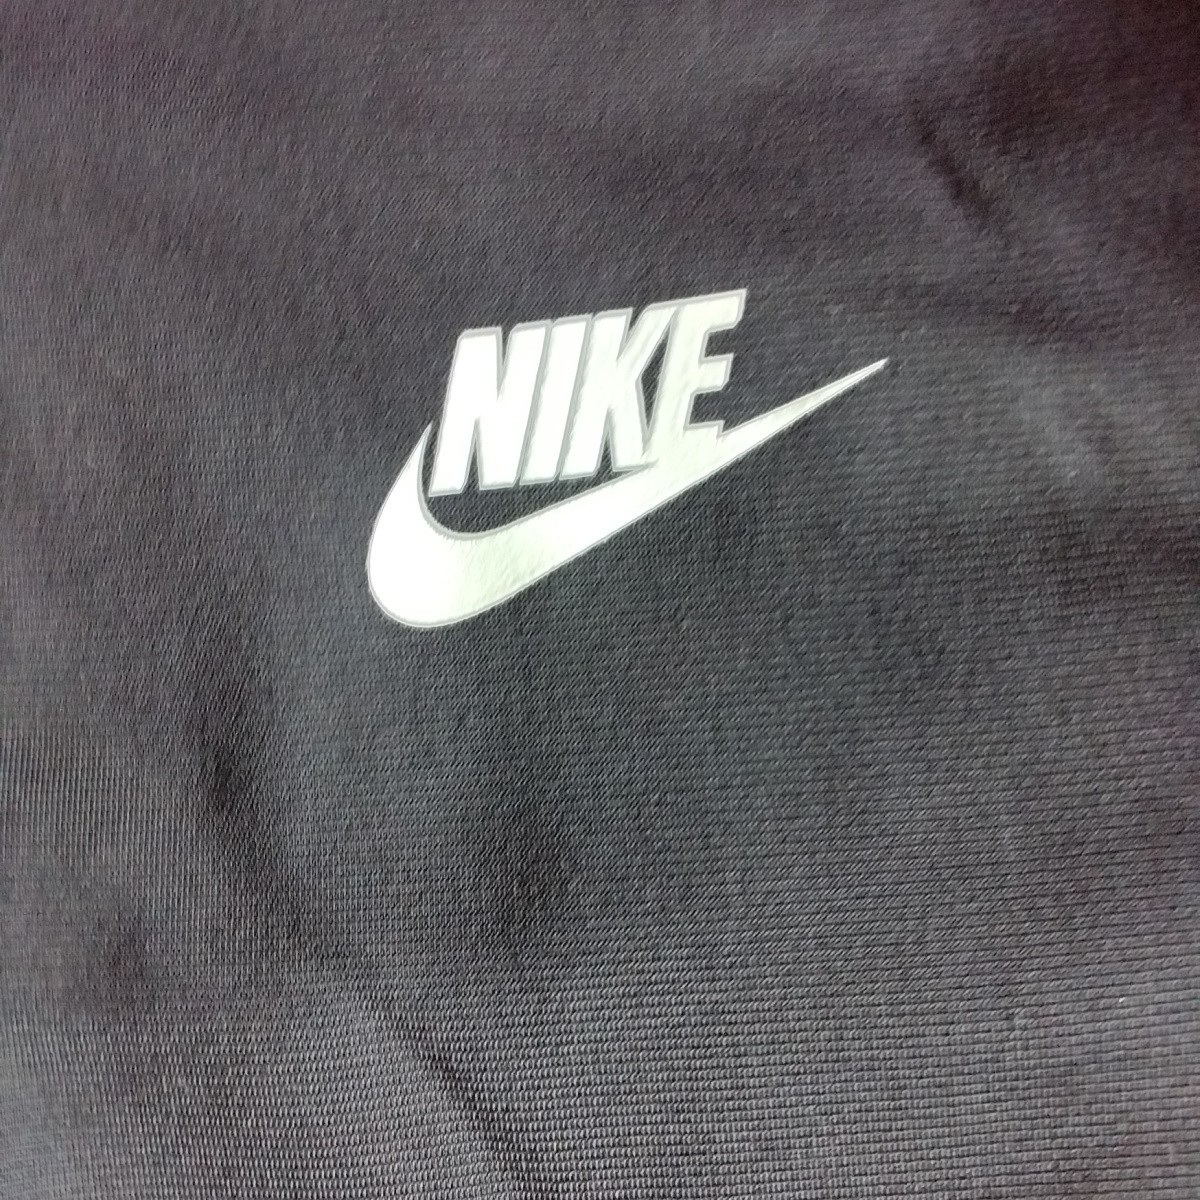  Nike nike Kids Junior спорт одежда L размер джерси материалы 